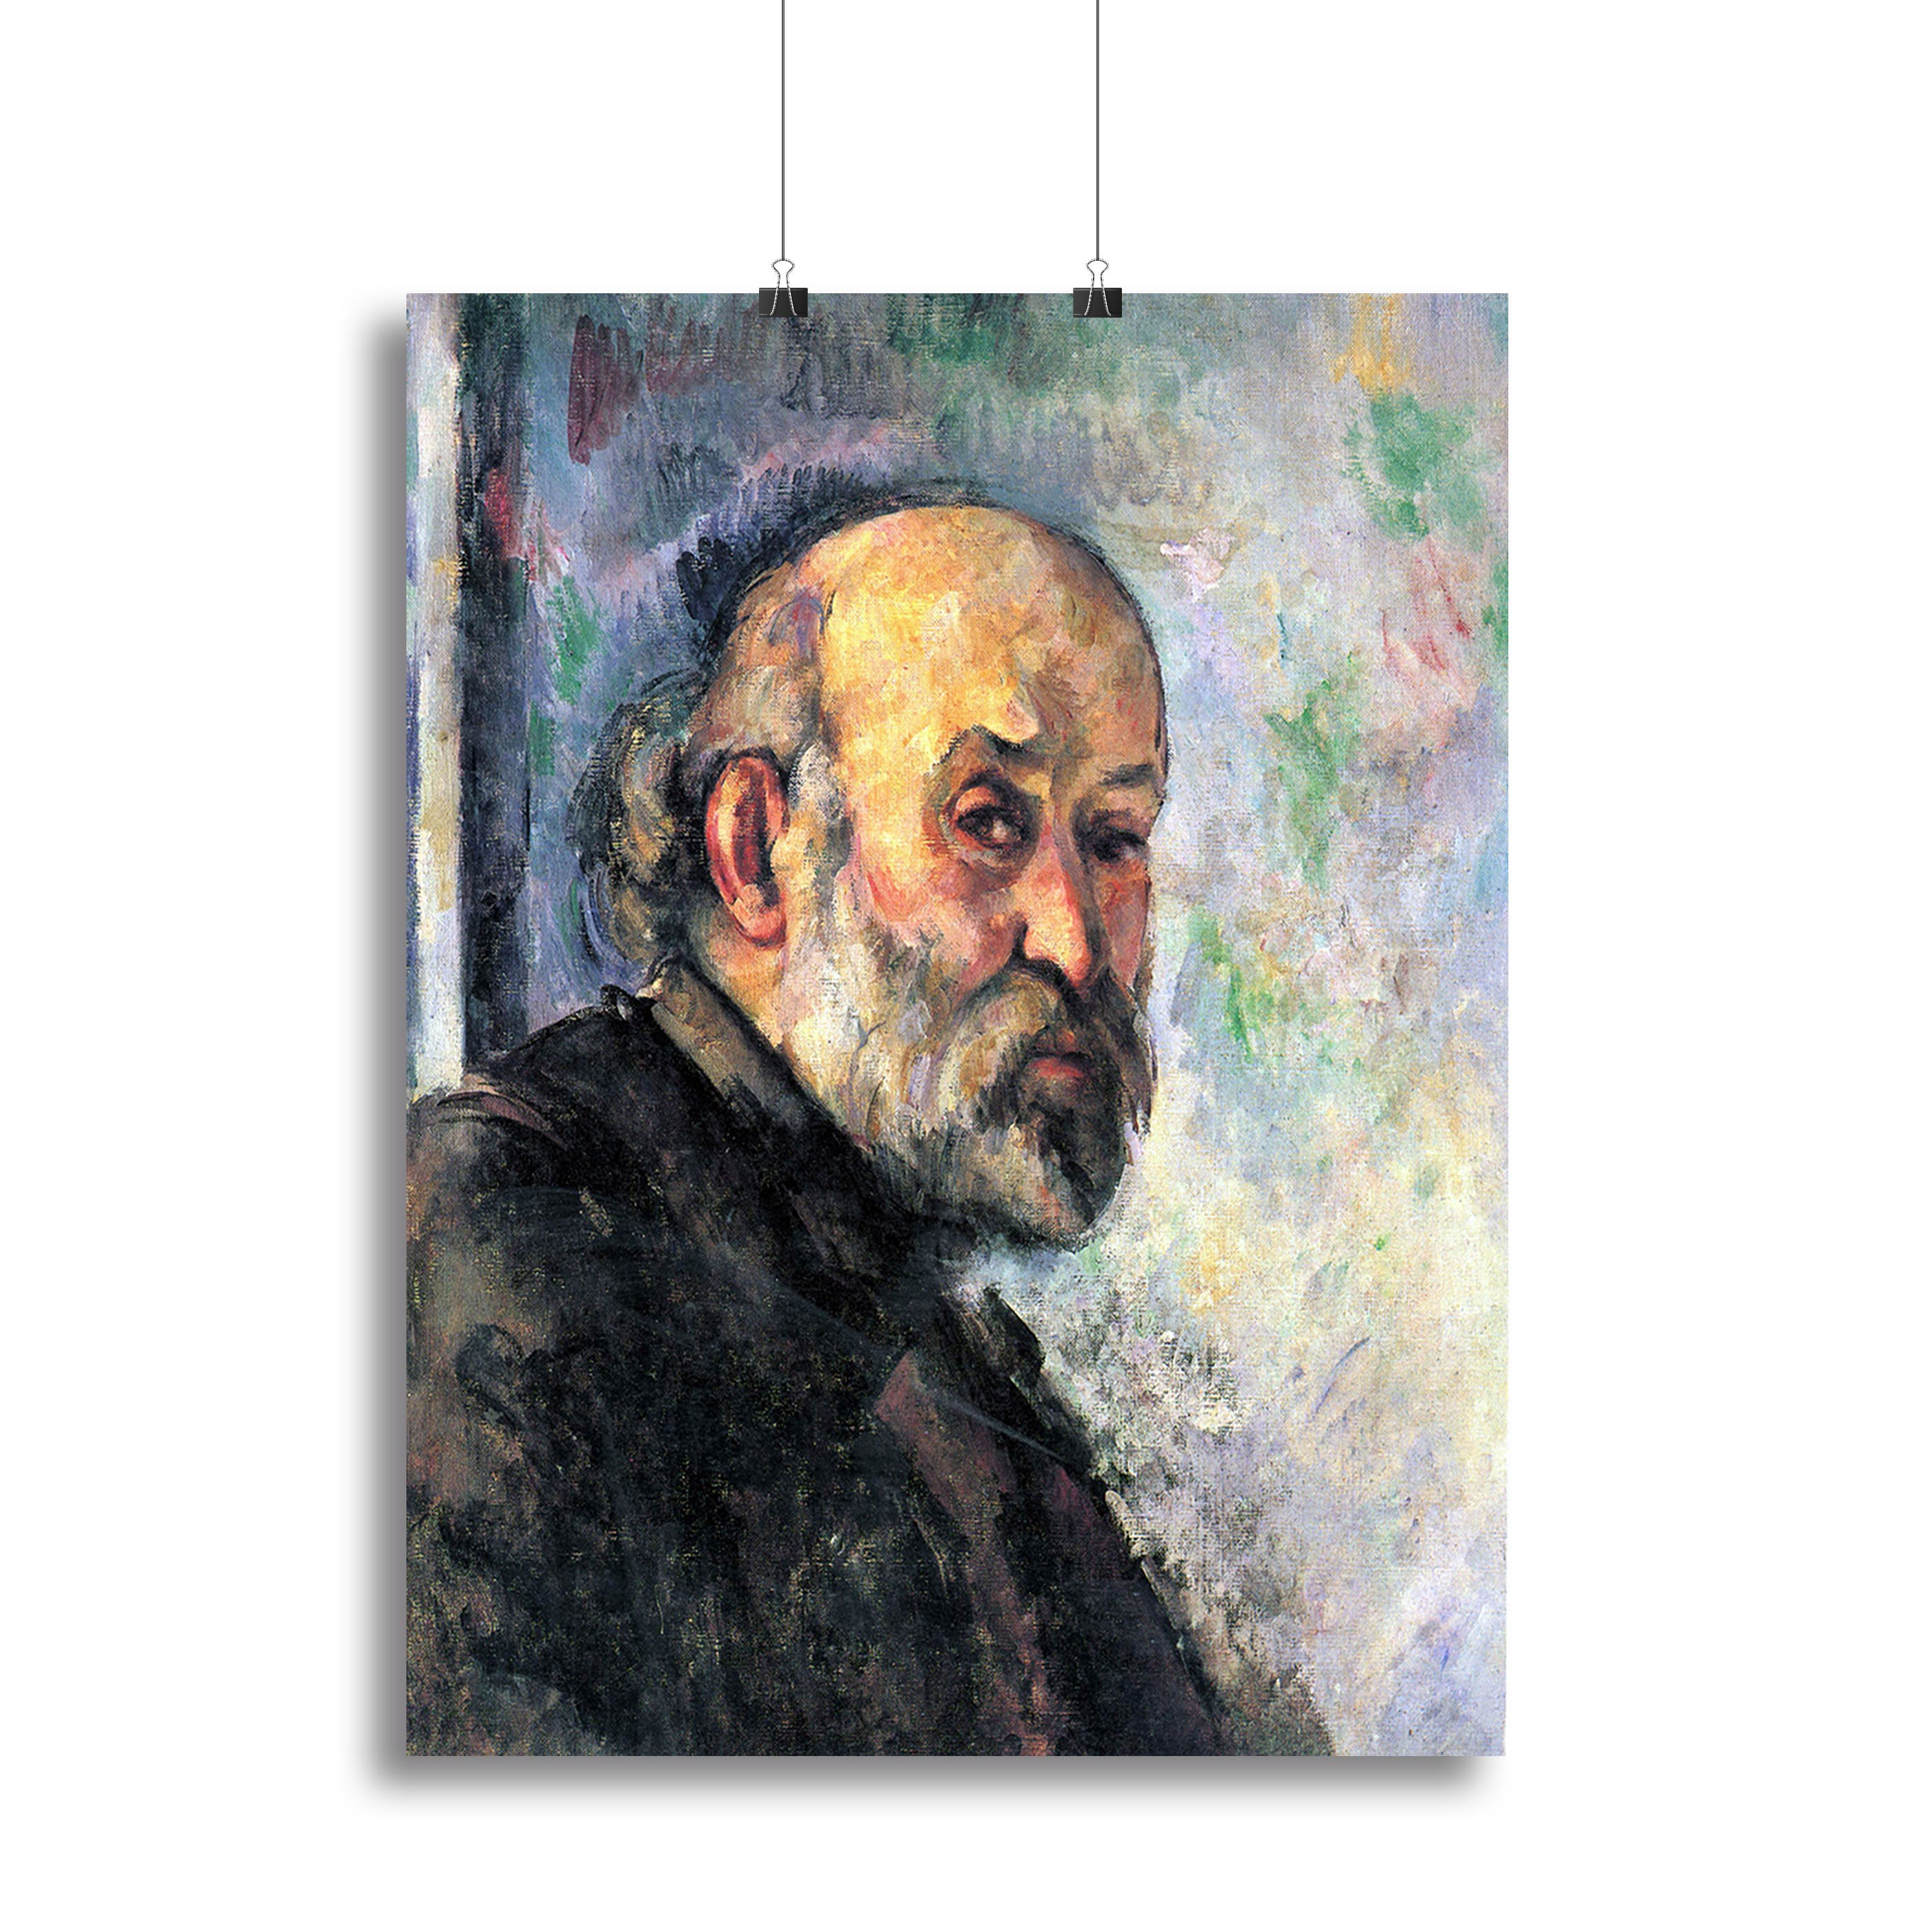 Self Portrait #4 by Cezanne Canvas Print or Poster - Canvas Art Rocks - 2